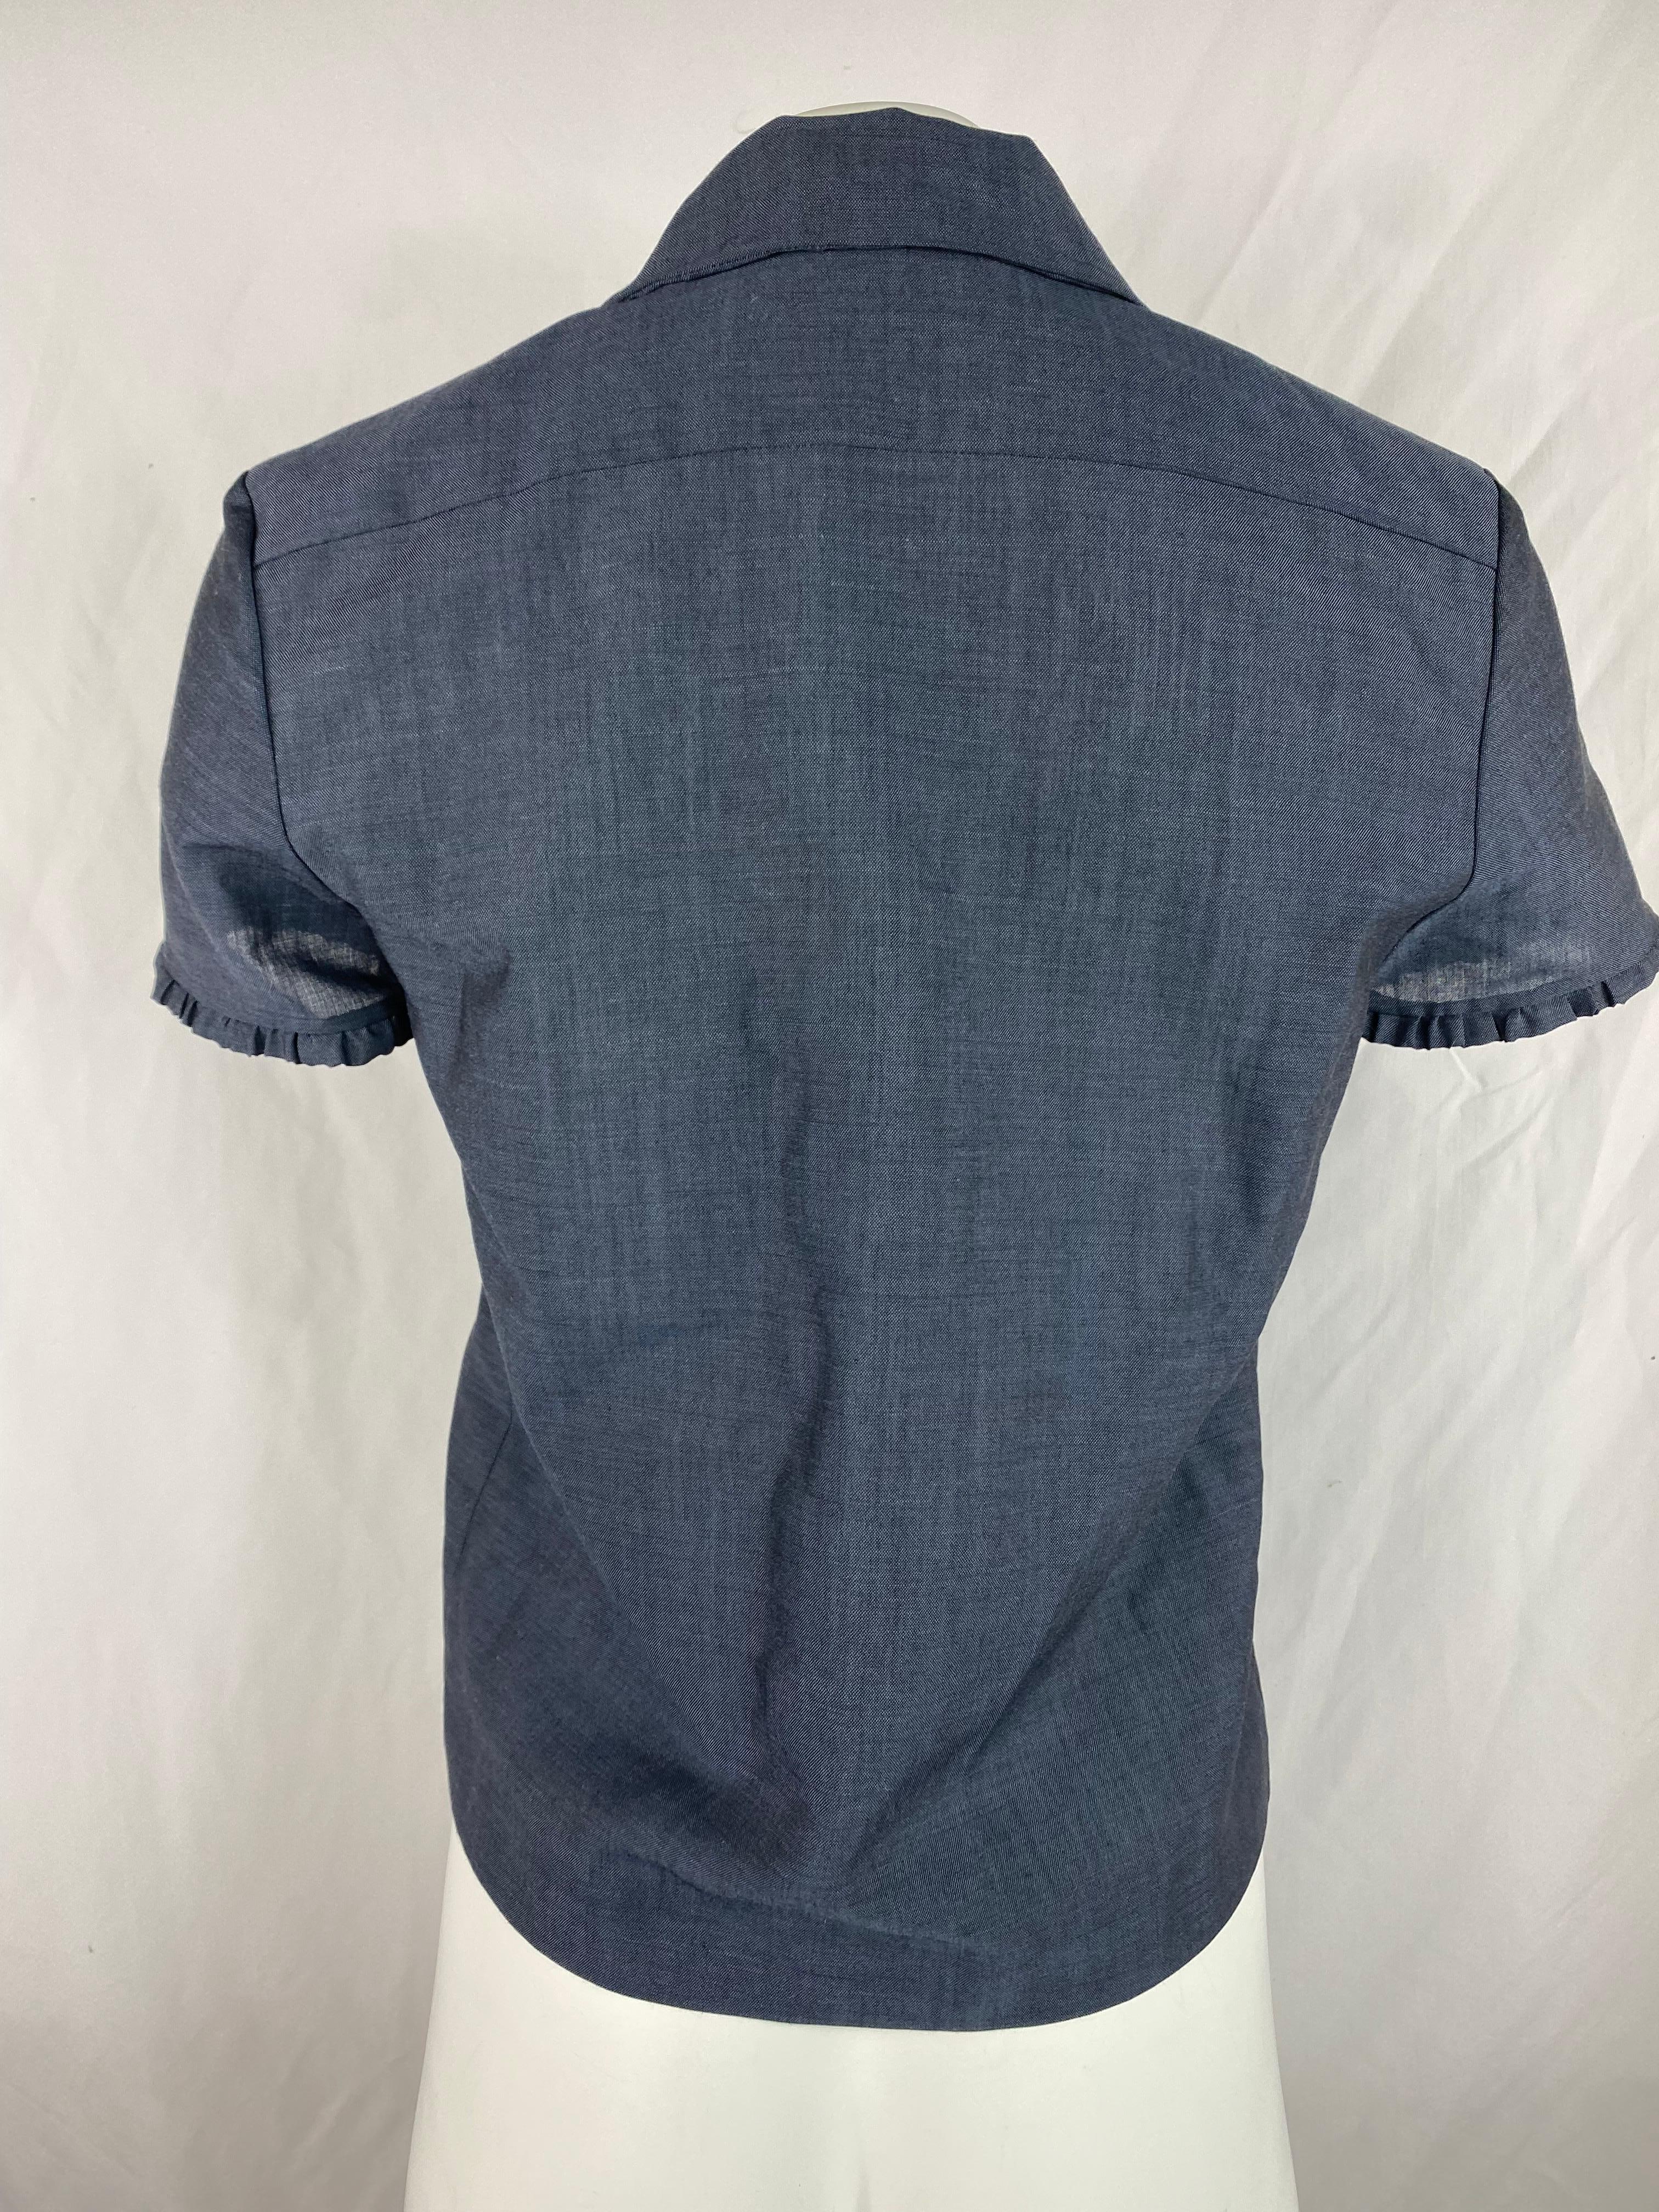 Black Marc Jacobs Navy Short Sleeves Shirt, Size 4